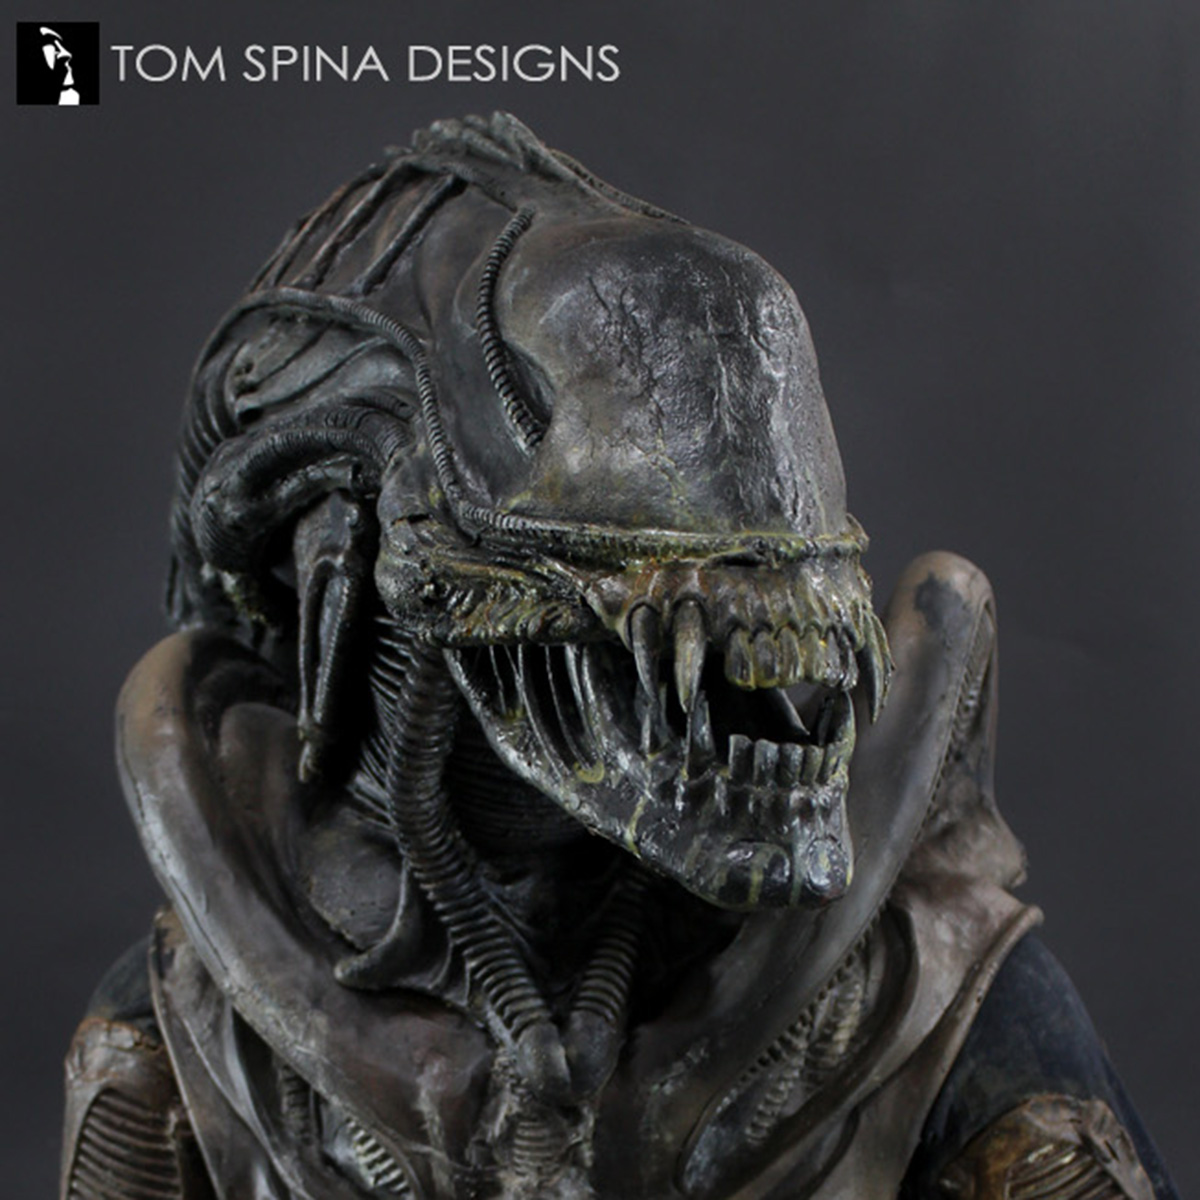 Alien (film series) Archives - Tom Spina Designs » Tom Spina Designs